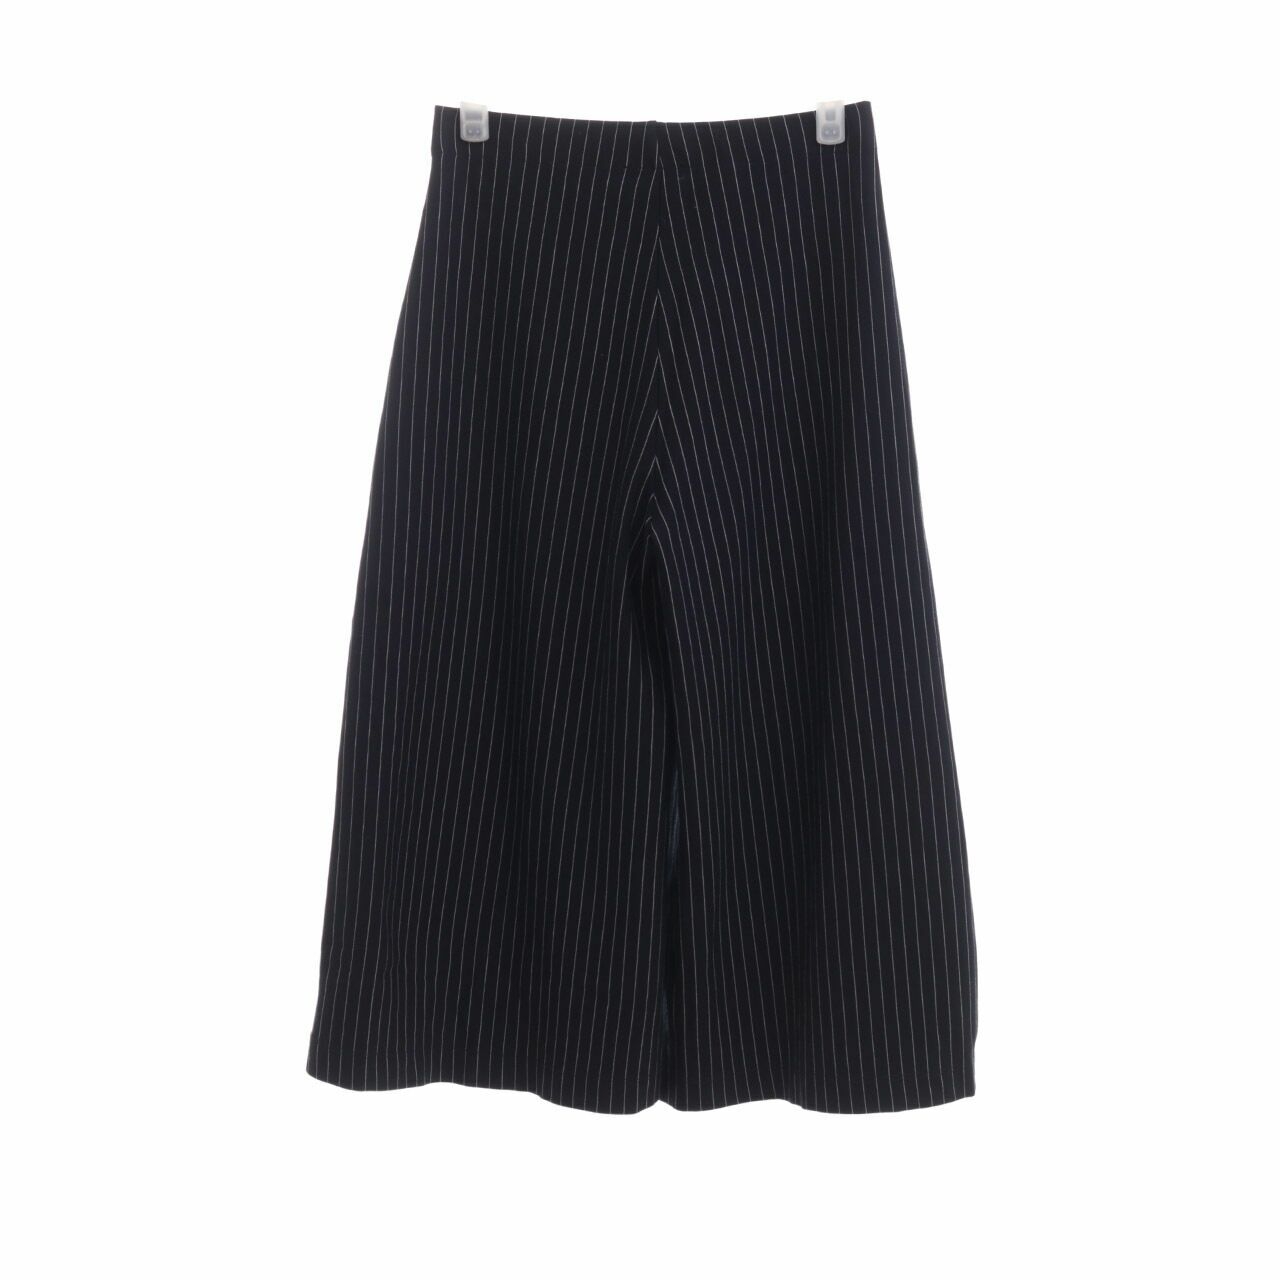 Zara Navy Striped Long Pants